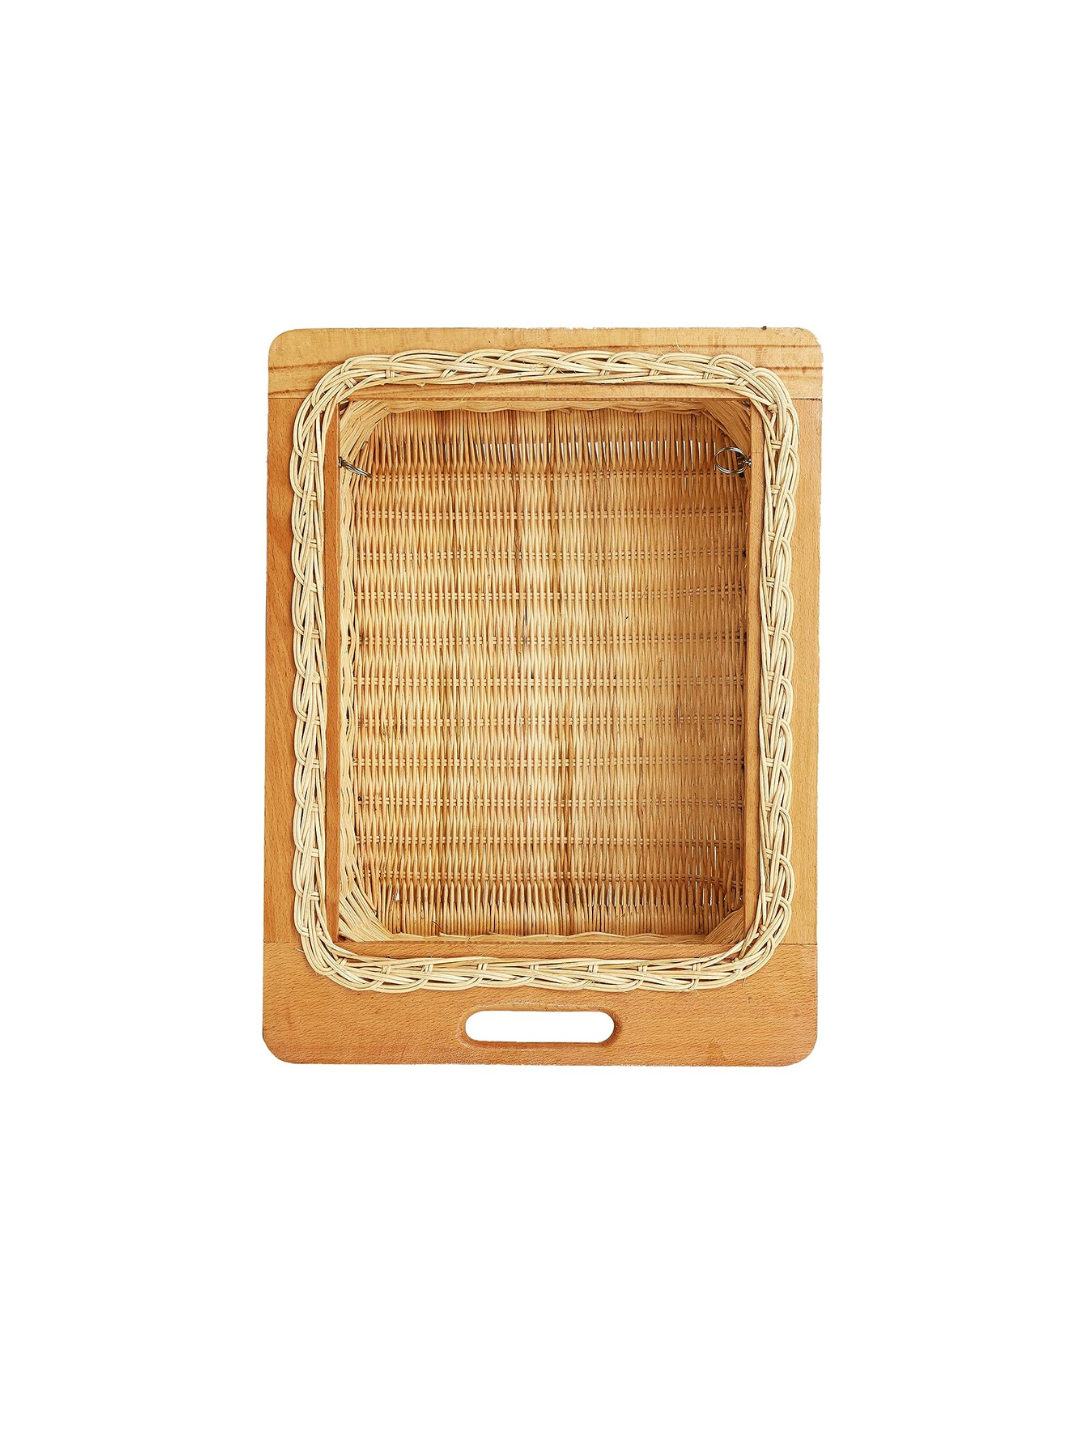 Wicker Basket for Modular Kitchen | Cane Basket 18 x 18 x 8 - Selvi - Akway